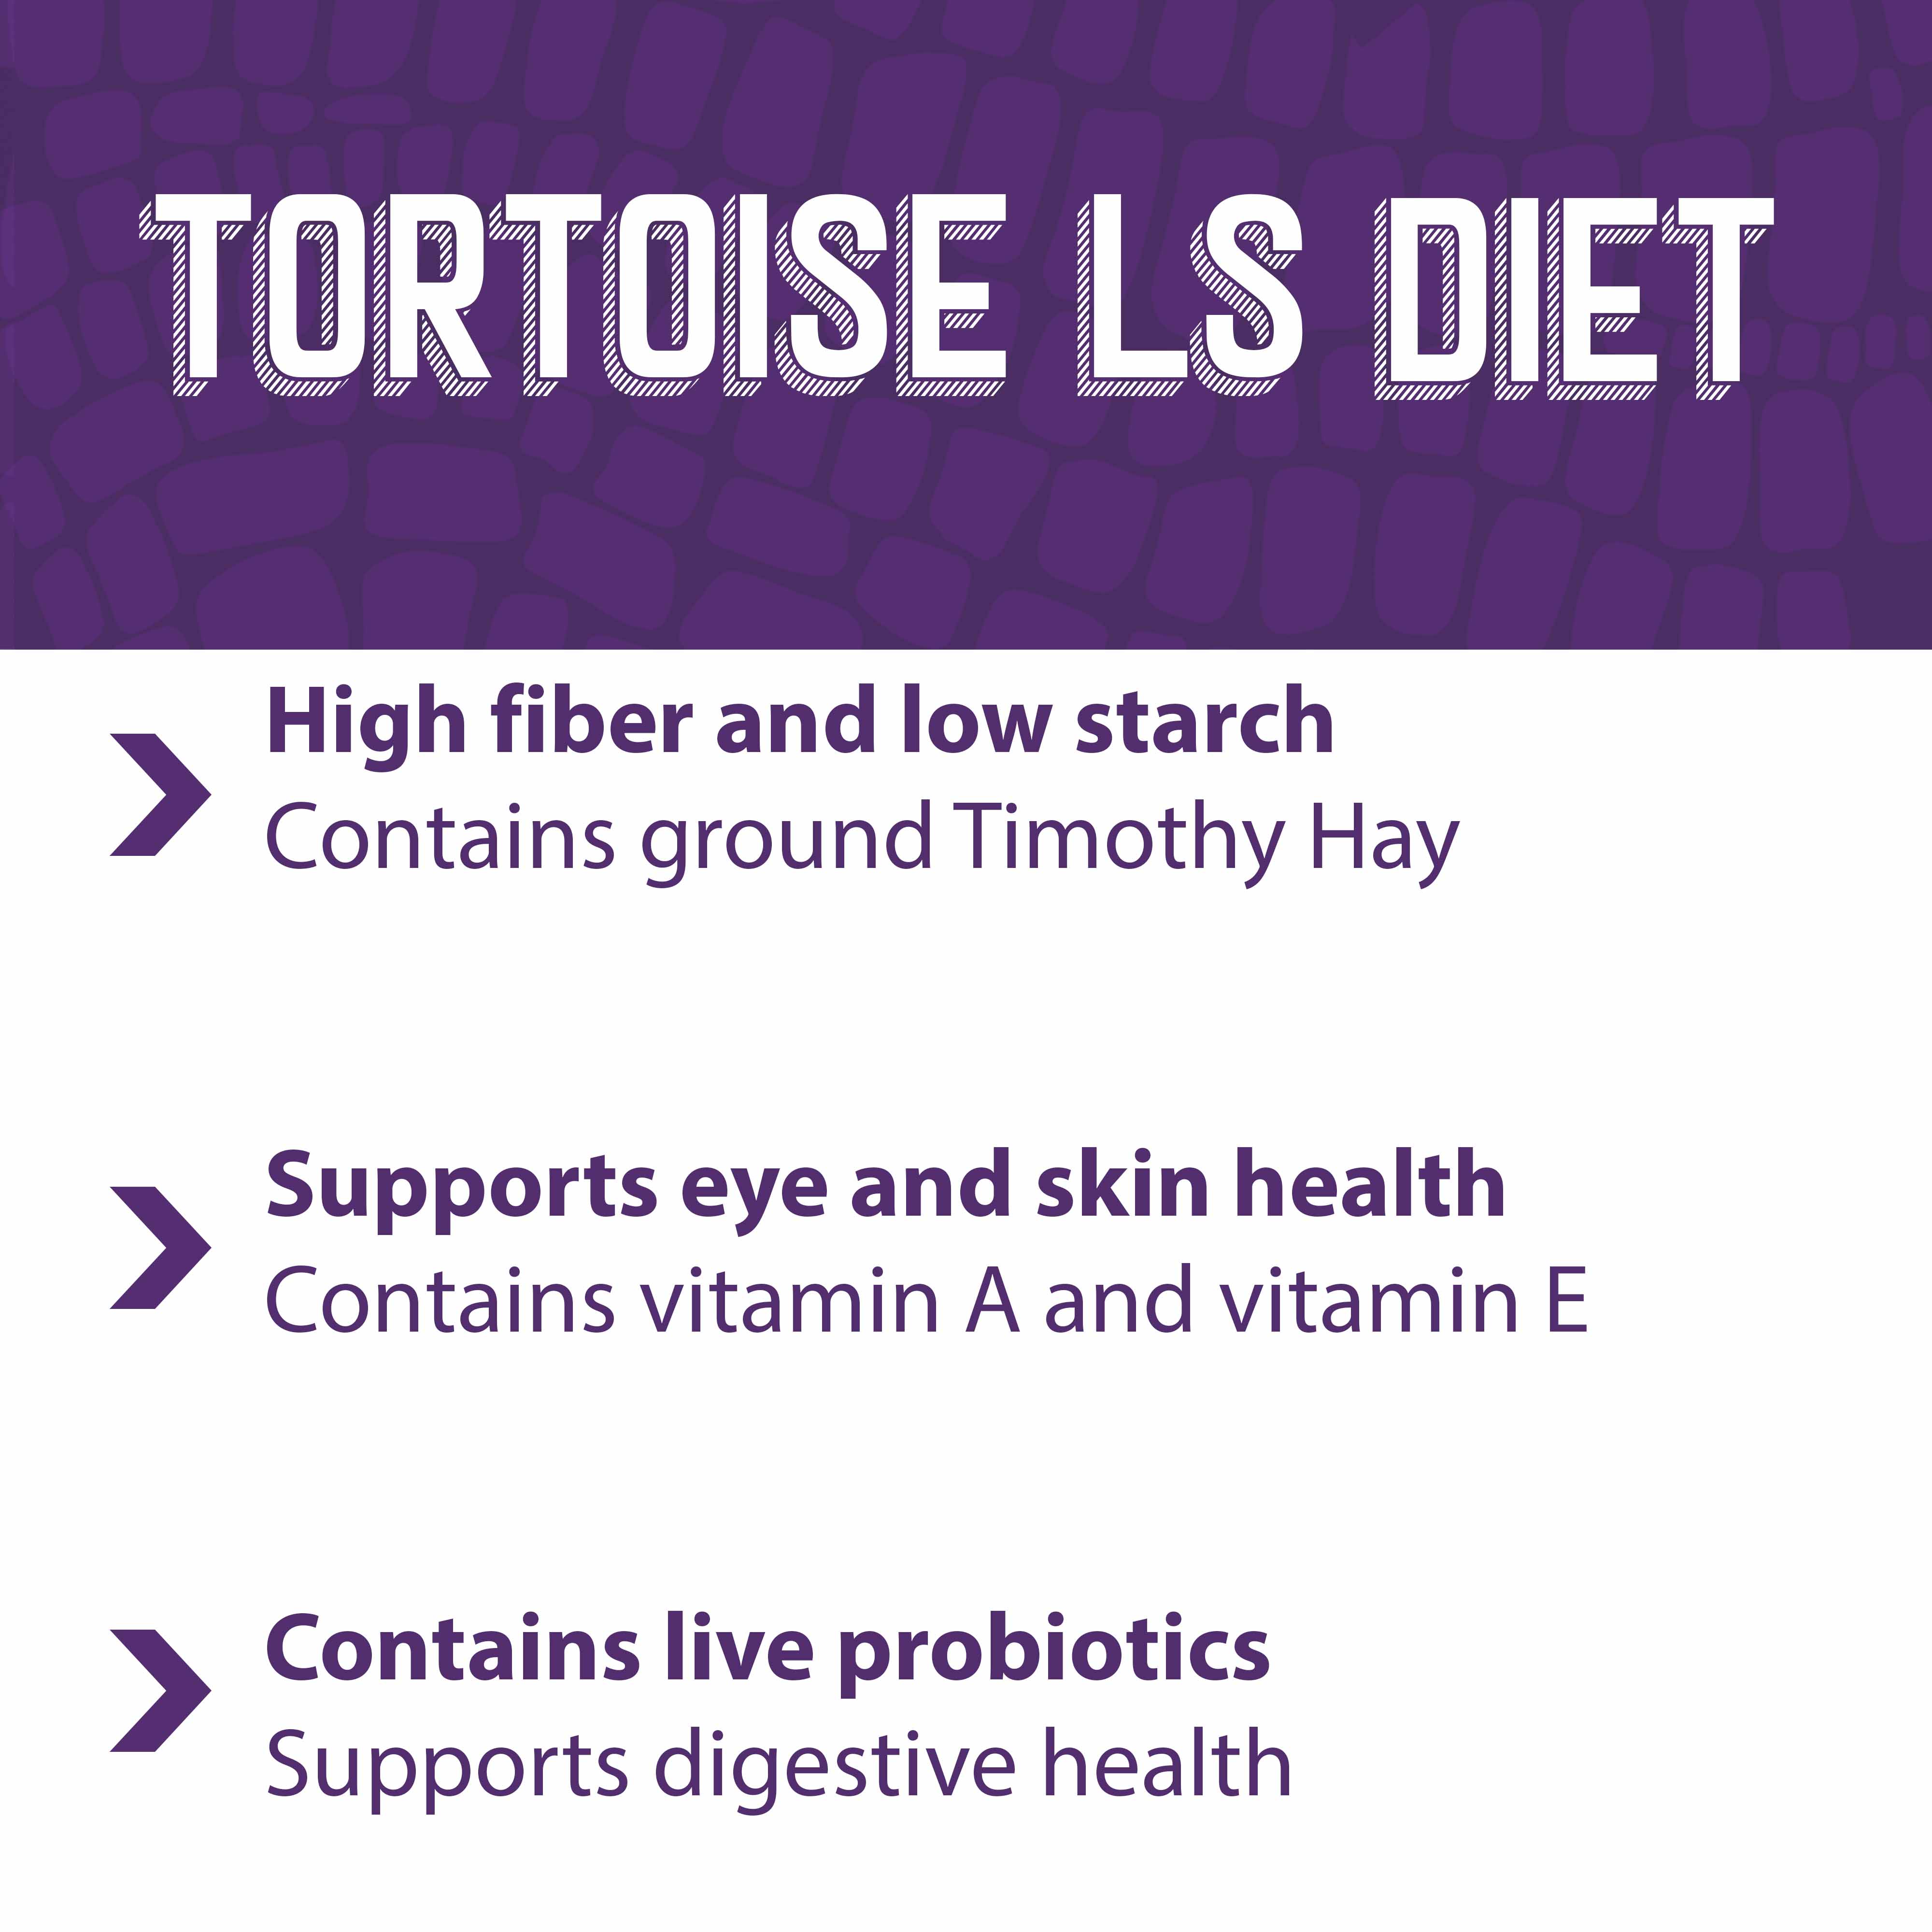 Mazuri Tortoise LS diet is high in fiber and low in starch